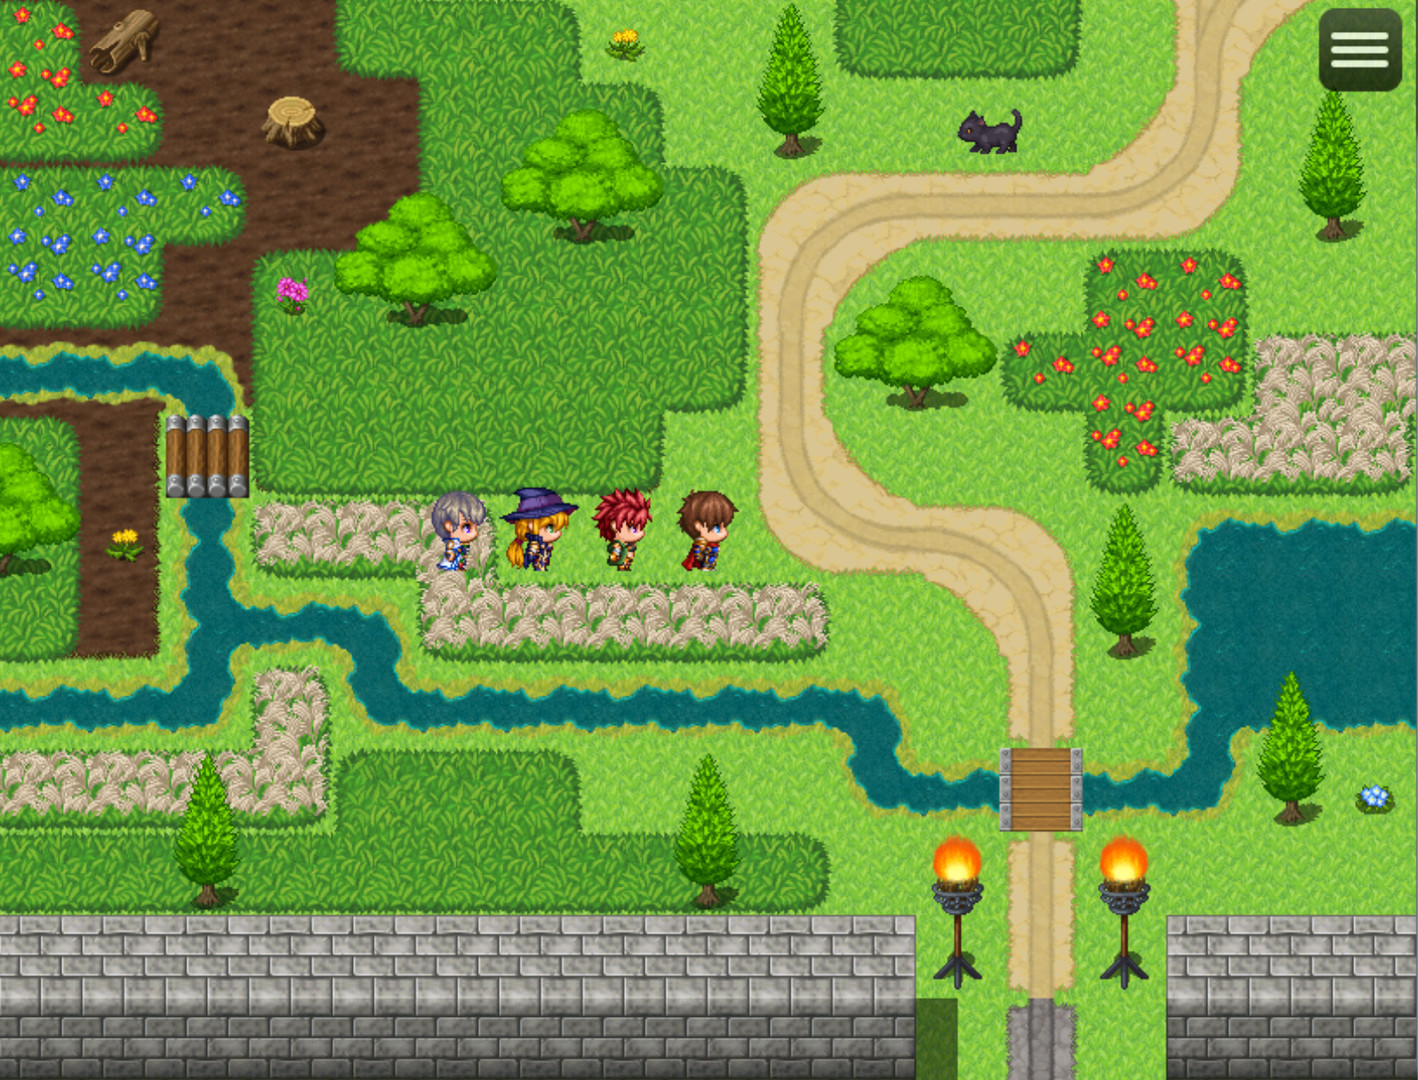 RPG Maker MZ - Winding Road and Grassland Tileset DLC